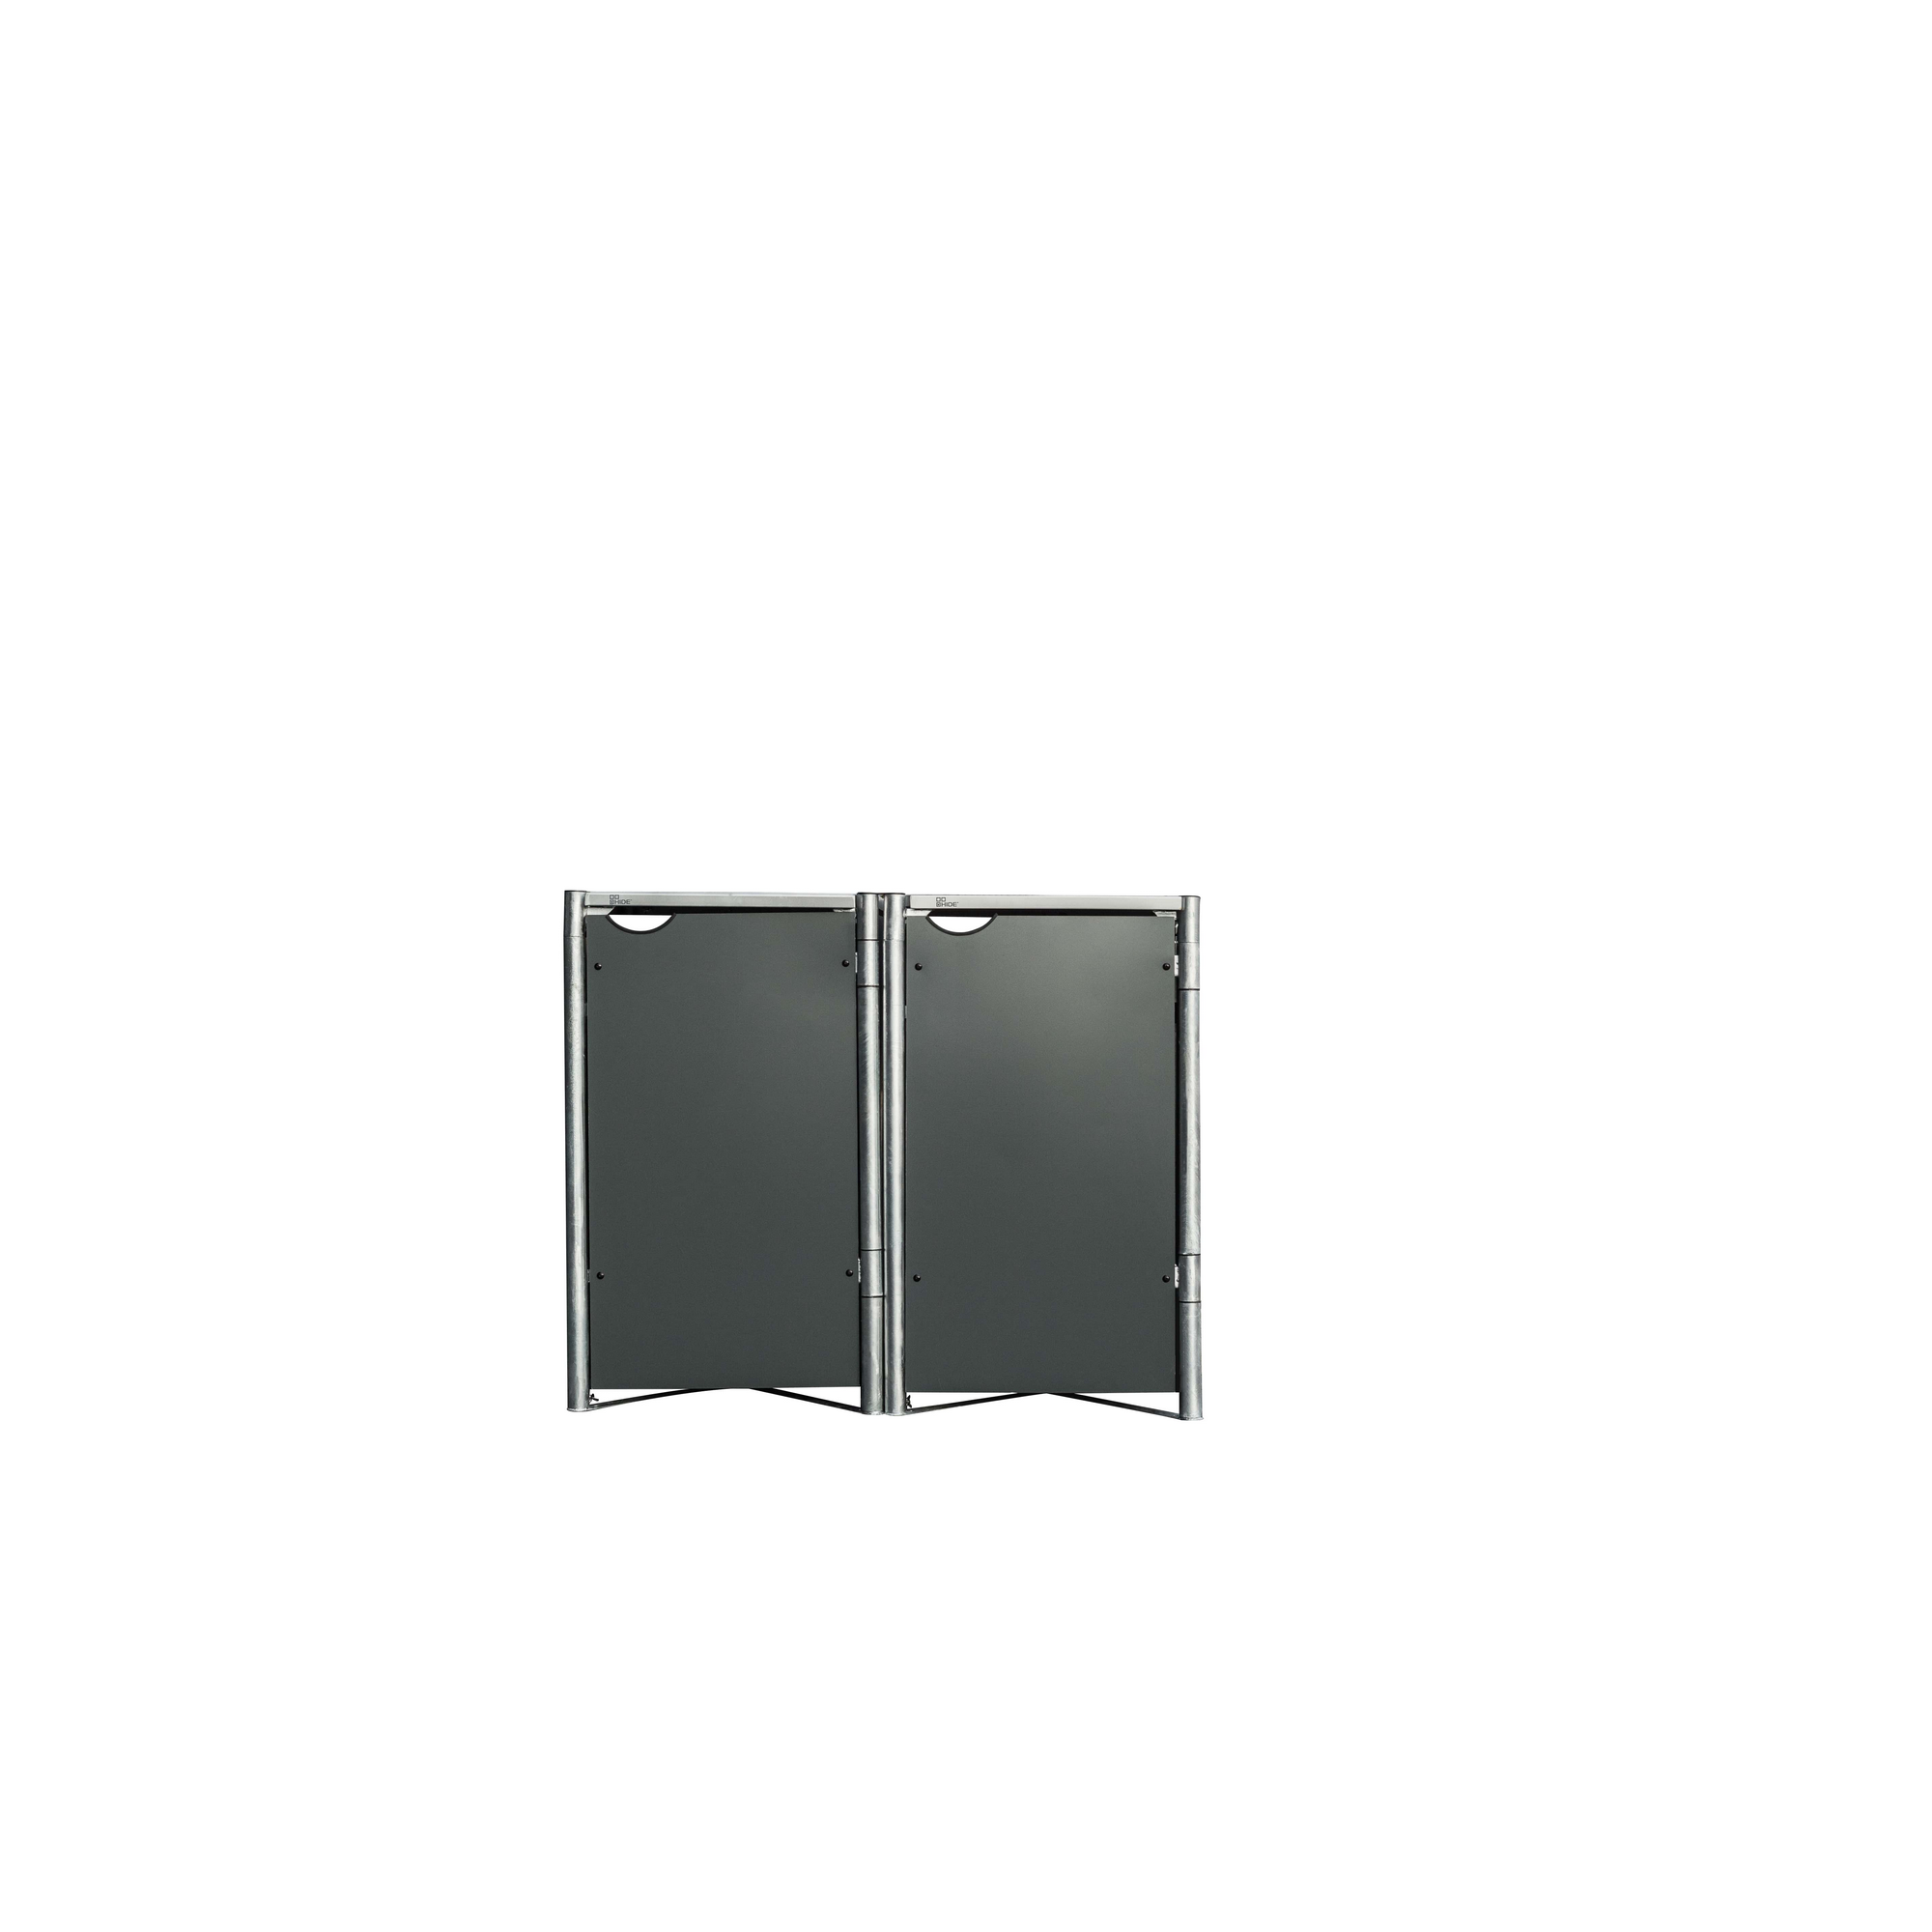 Mülltonnenbox grau Metall für 2 Mülltonnen a' 240 l 81 x 140 x 115 cm + product picture